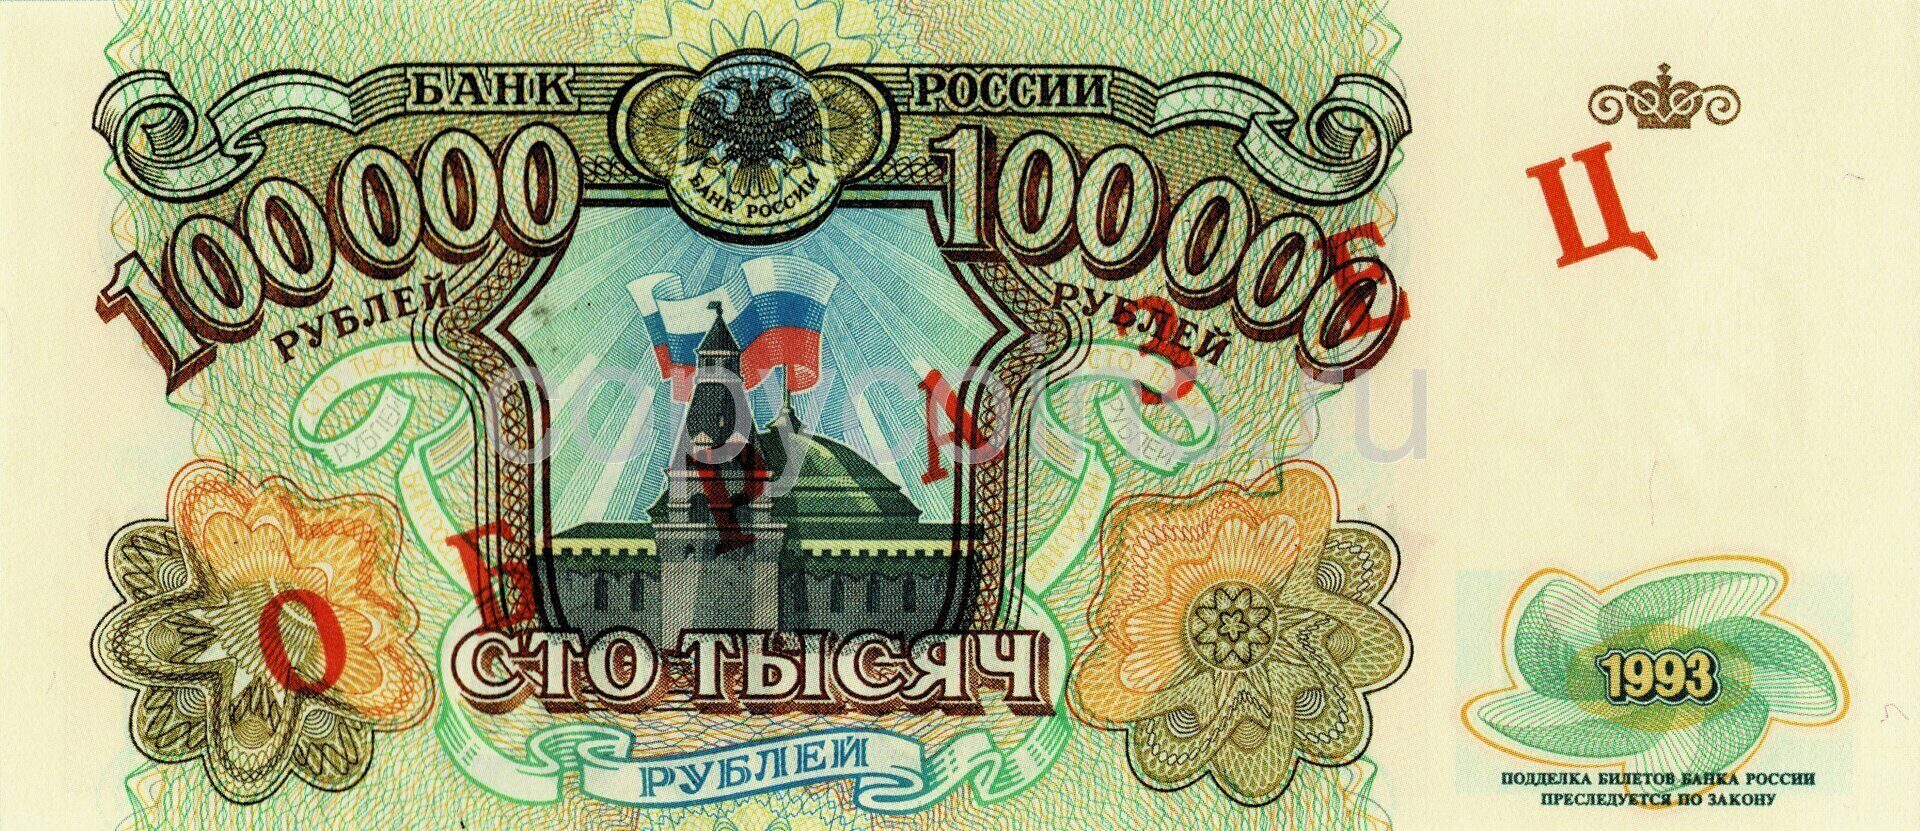 Дети 1 на 100000. Банкнота 100000 рублей 1993. 100000 Рублей купюра 1993. 100 000 Рублей купюра 1993 года. Банкнота 100000 рублей 1993 года.